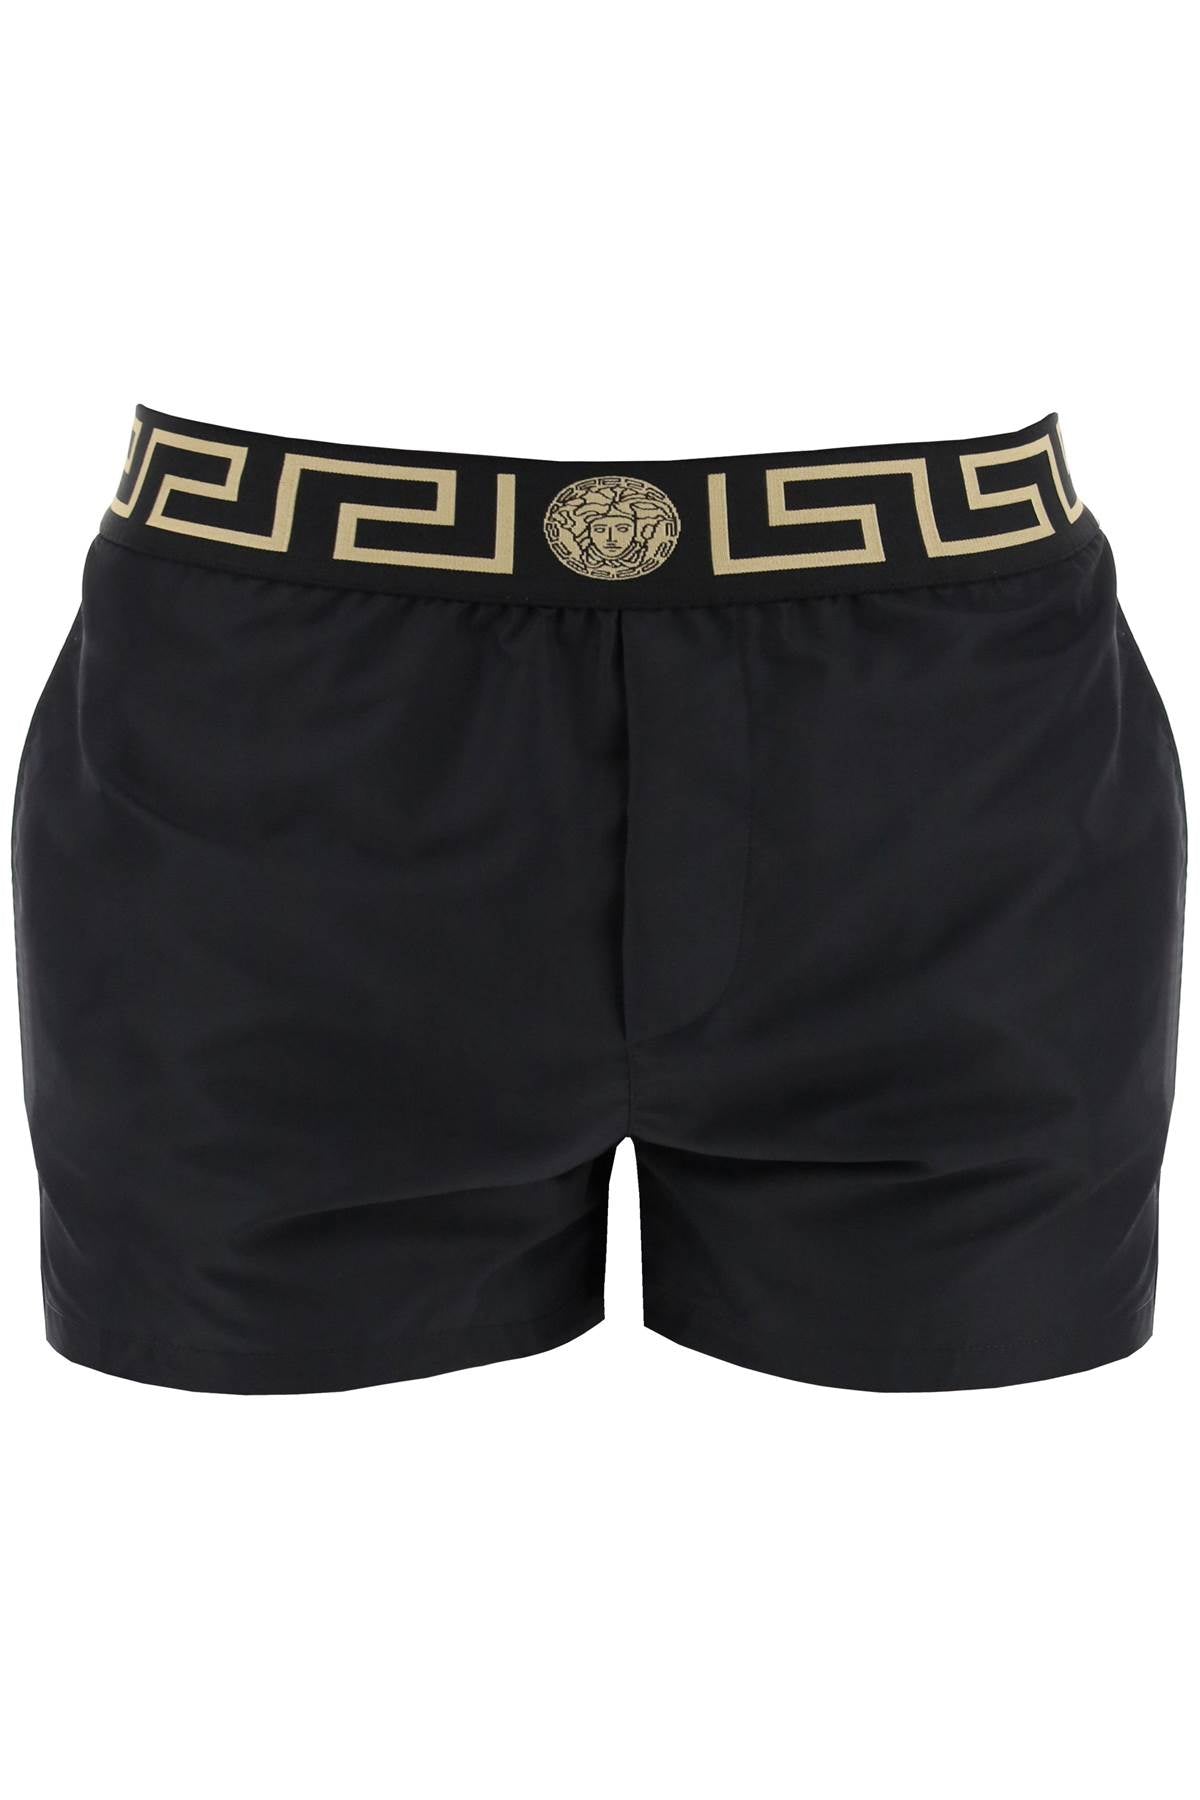 Versace greek sea bermuda shorts for ABU01022 A232415 BLACK GOLD GREEK KEY